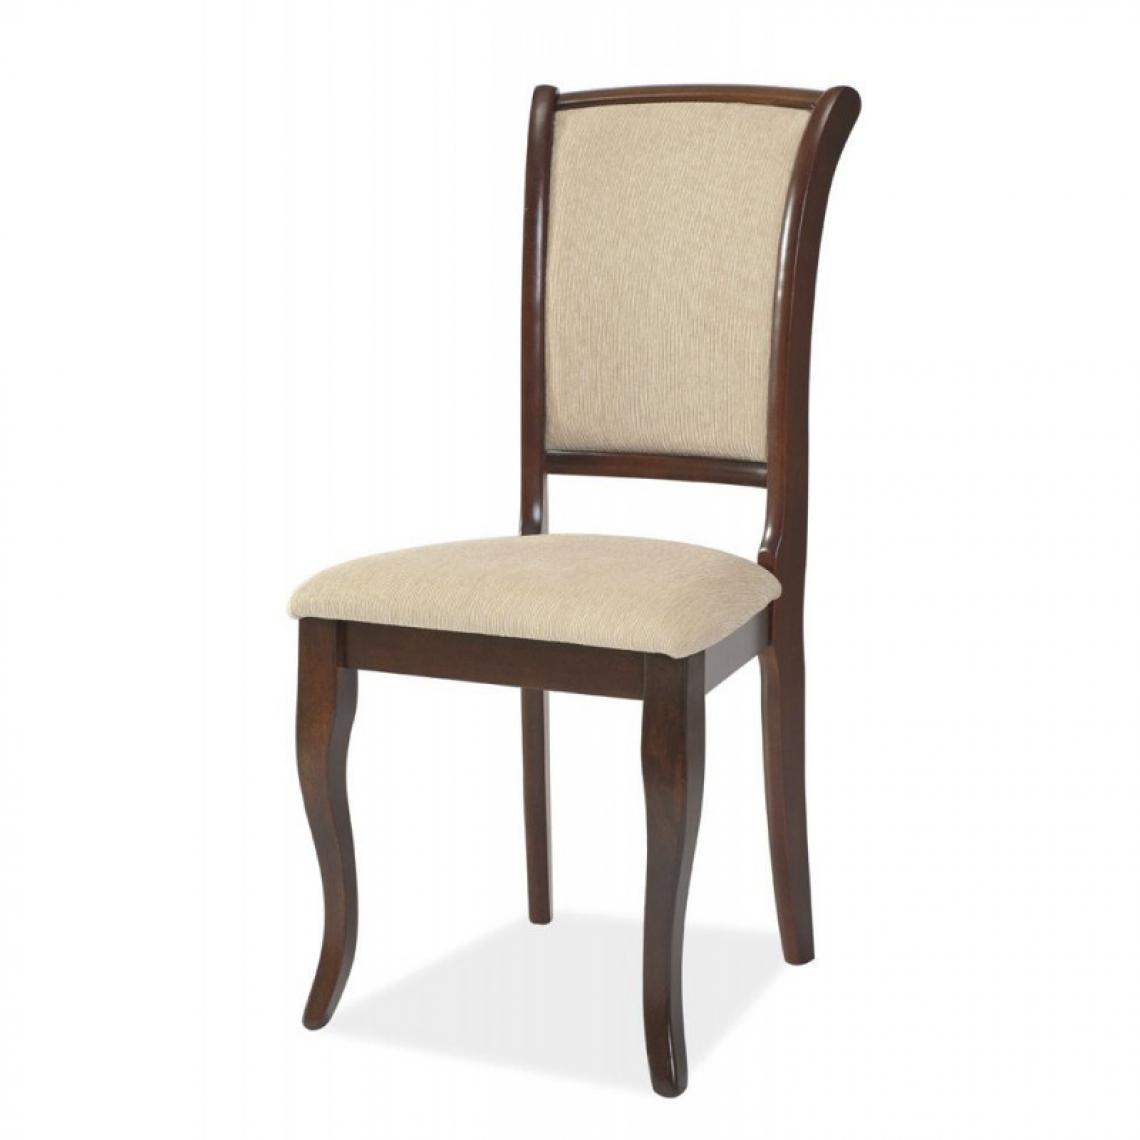 Ac-Deco - Chaise de salon - L 45 x P 42 x H 96 cm - Marron et beige - Chaises